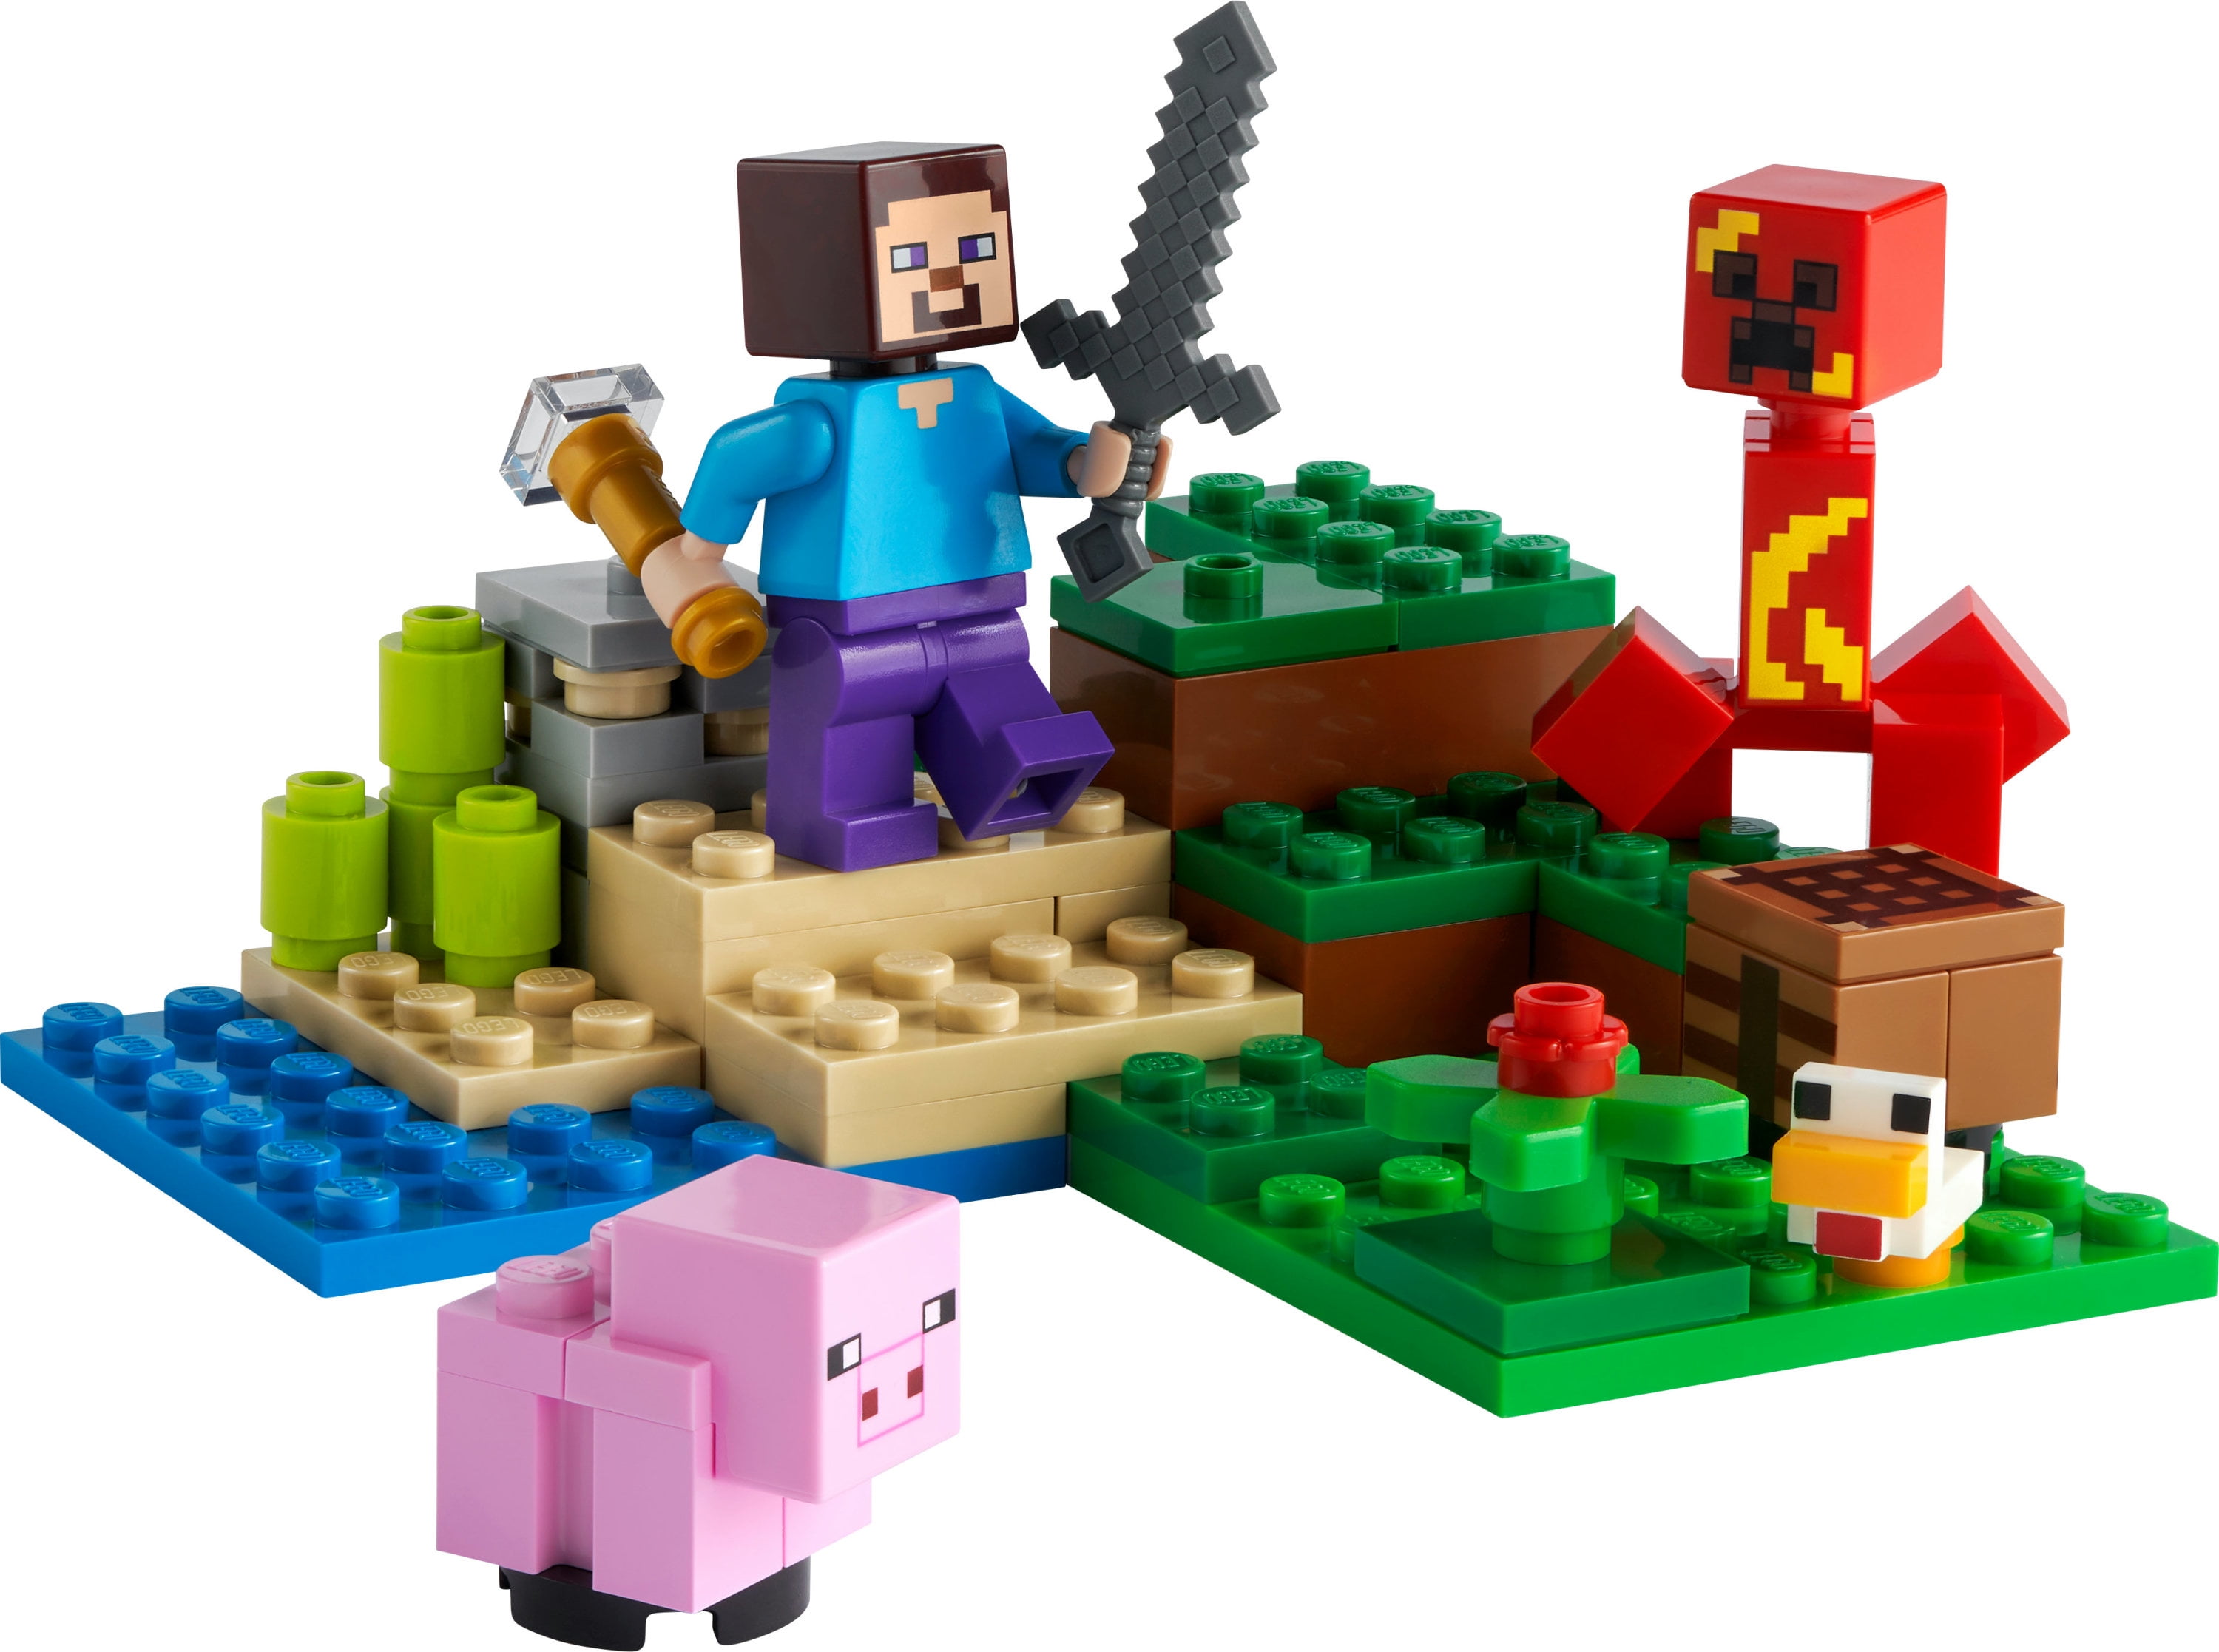 Lego Minecraft - Steve, Zombie, chicken, mystery box